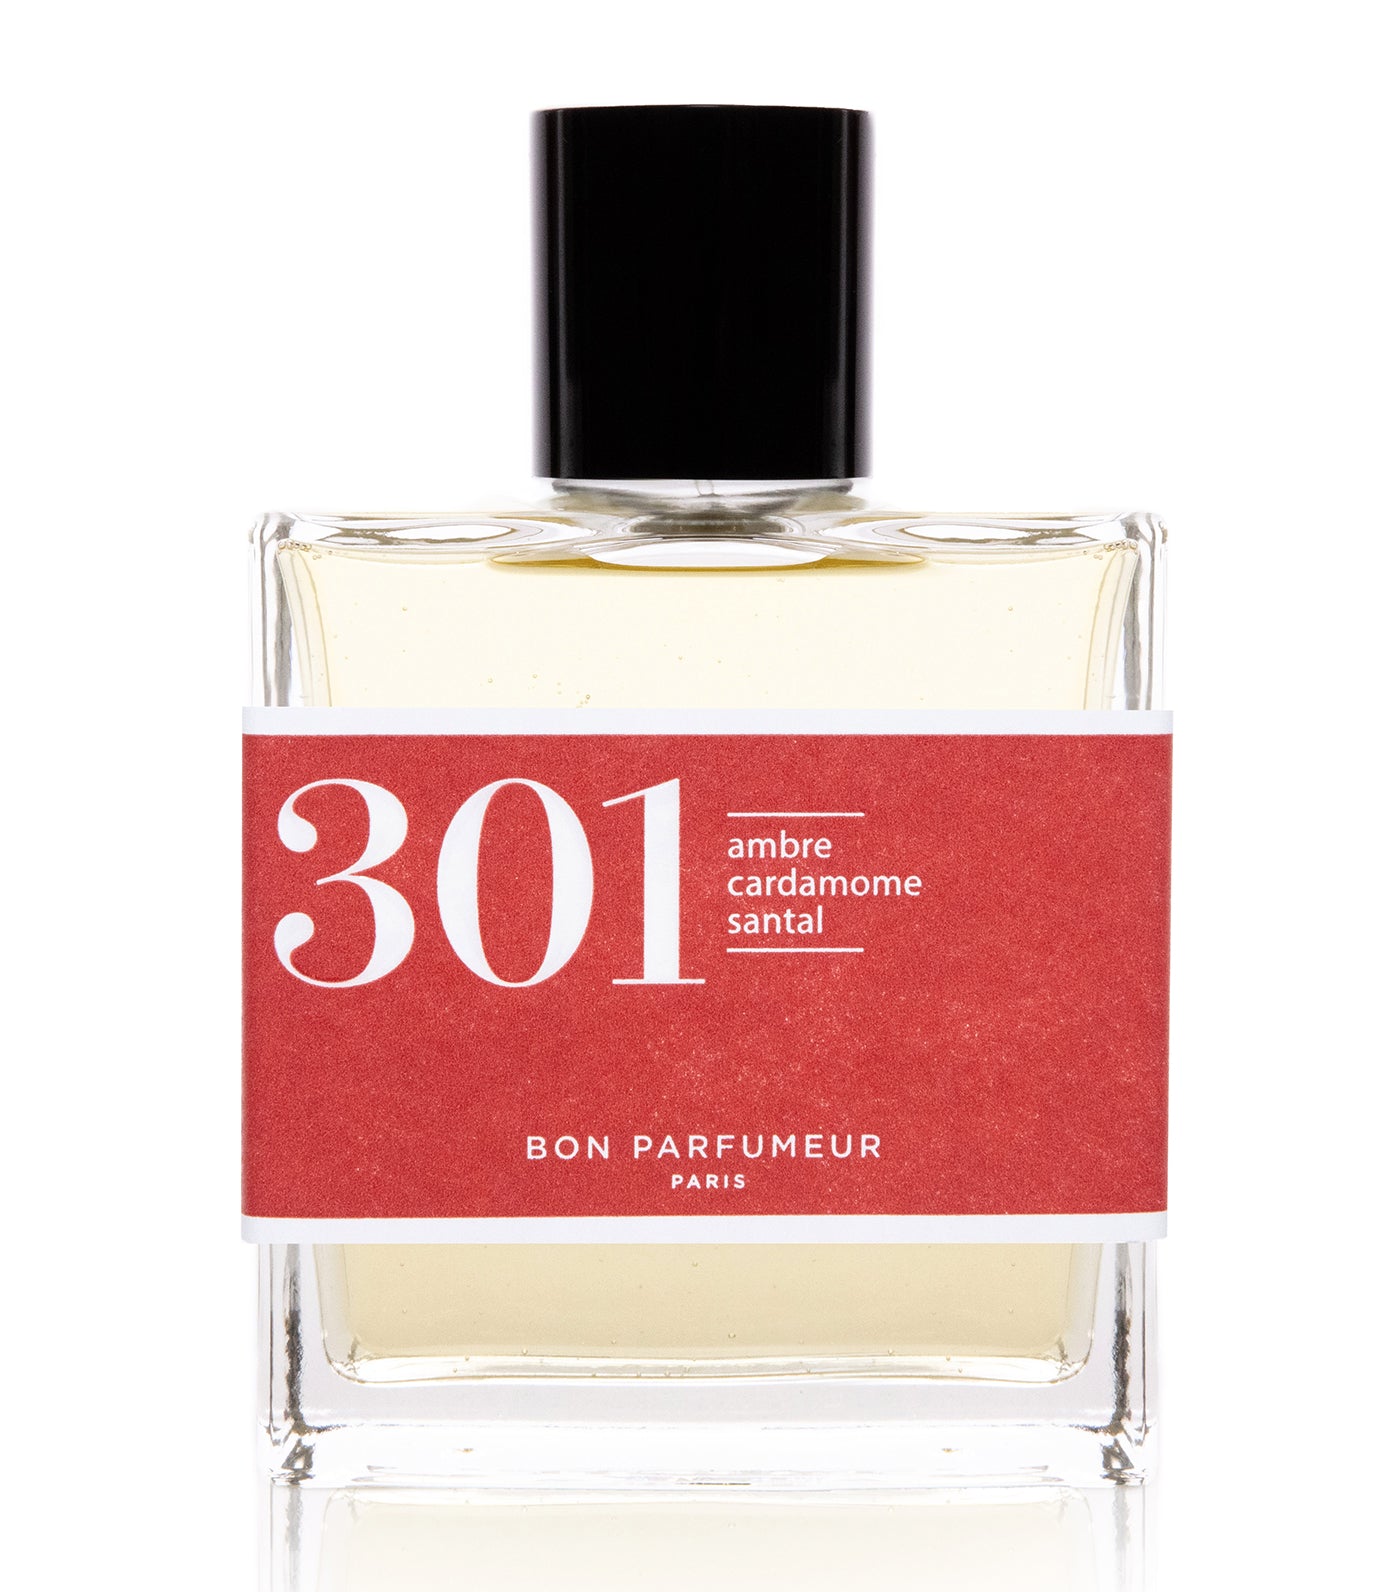 Eau de parfum 301 : sandalwood, amber and cardamom